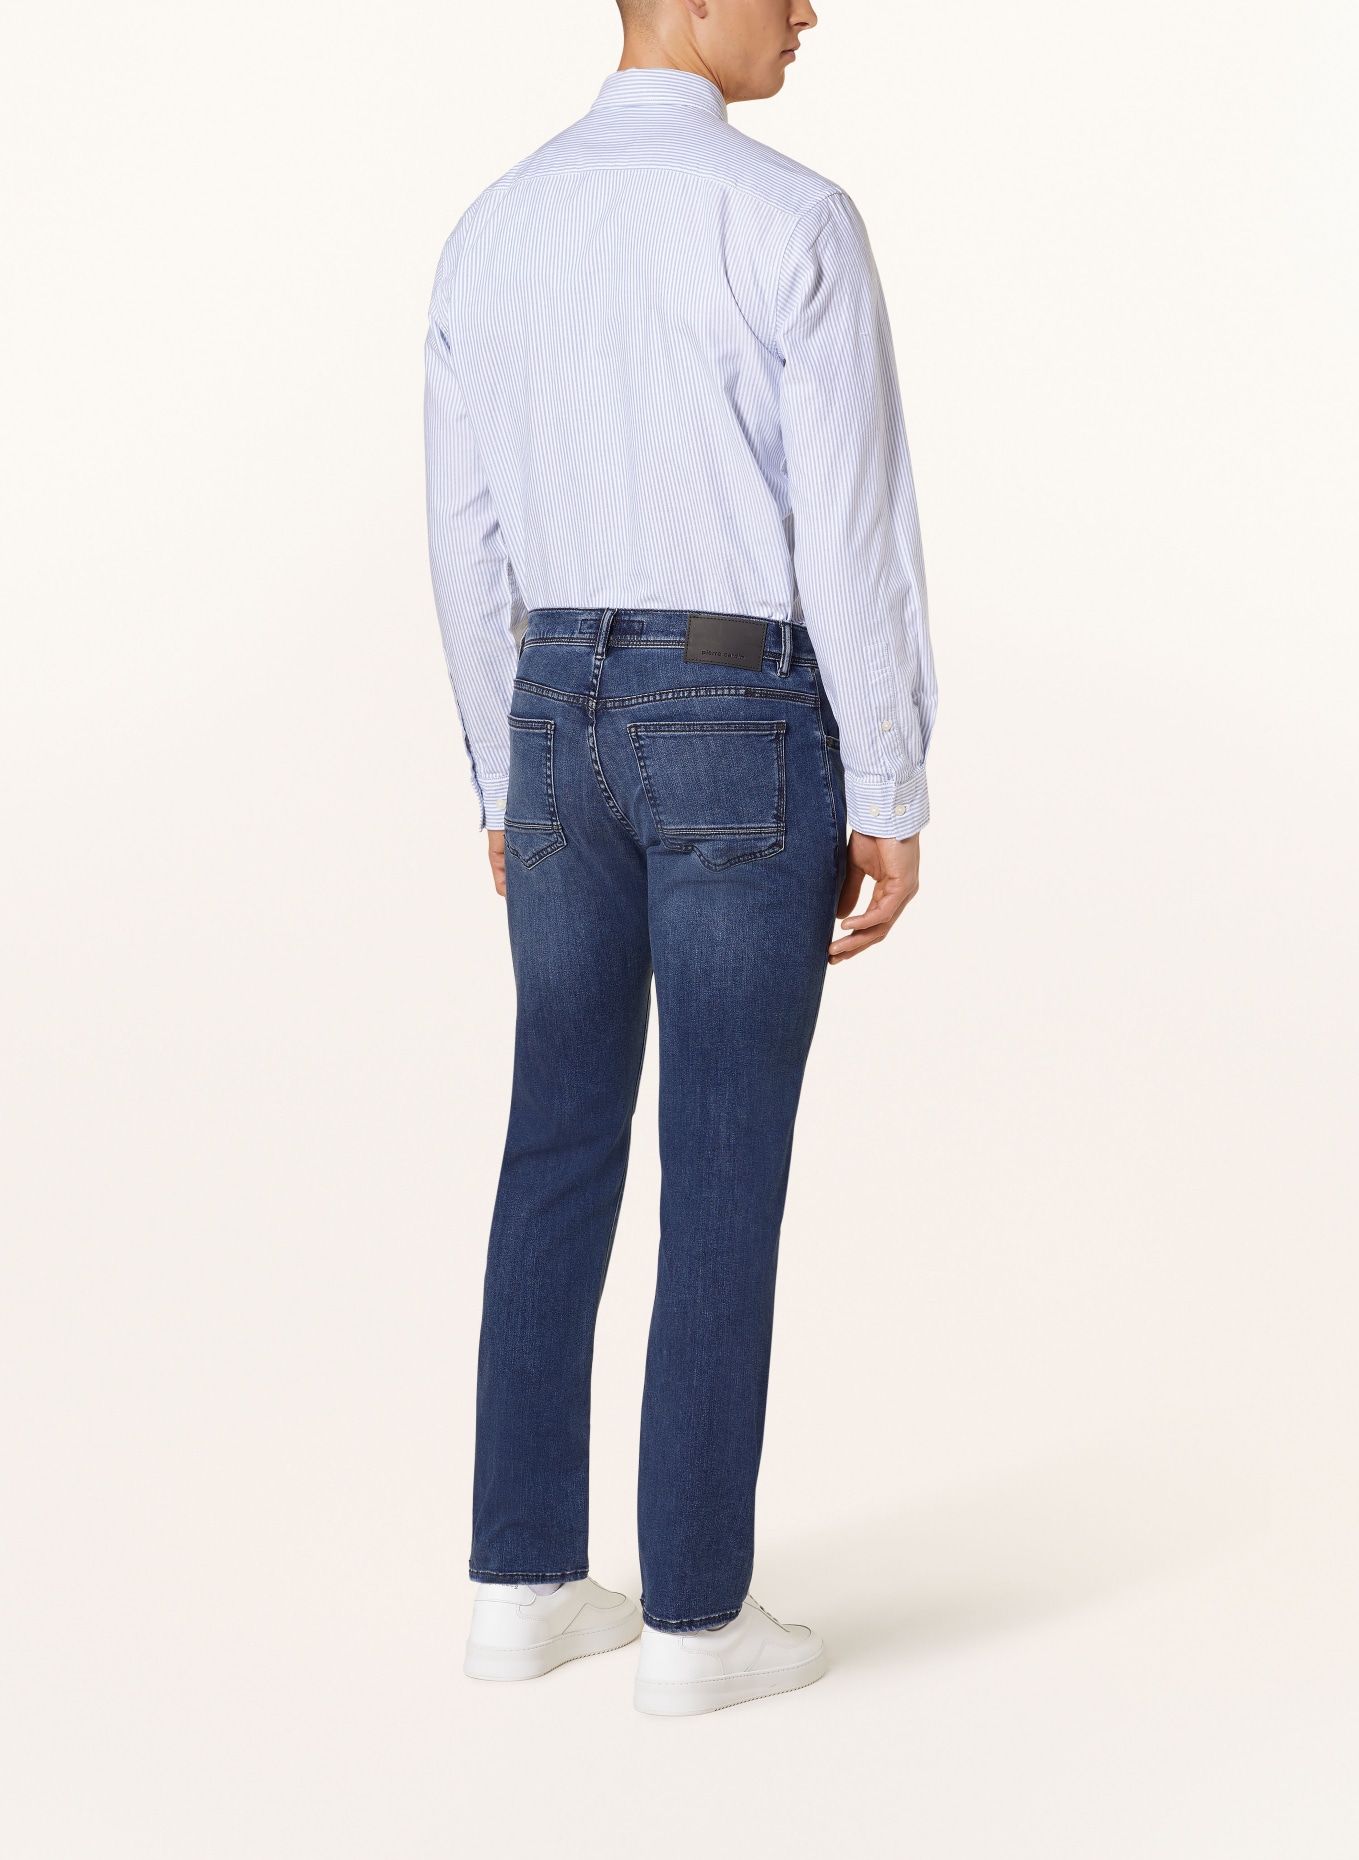 pierre cardin Jeans ANTIBES Slim Fit, Farbe: 6835 ocean blue used whisker (Bild 3)